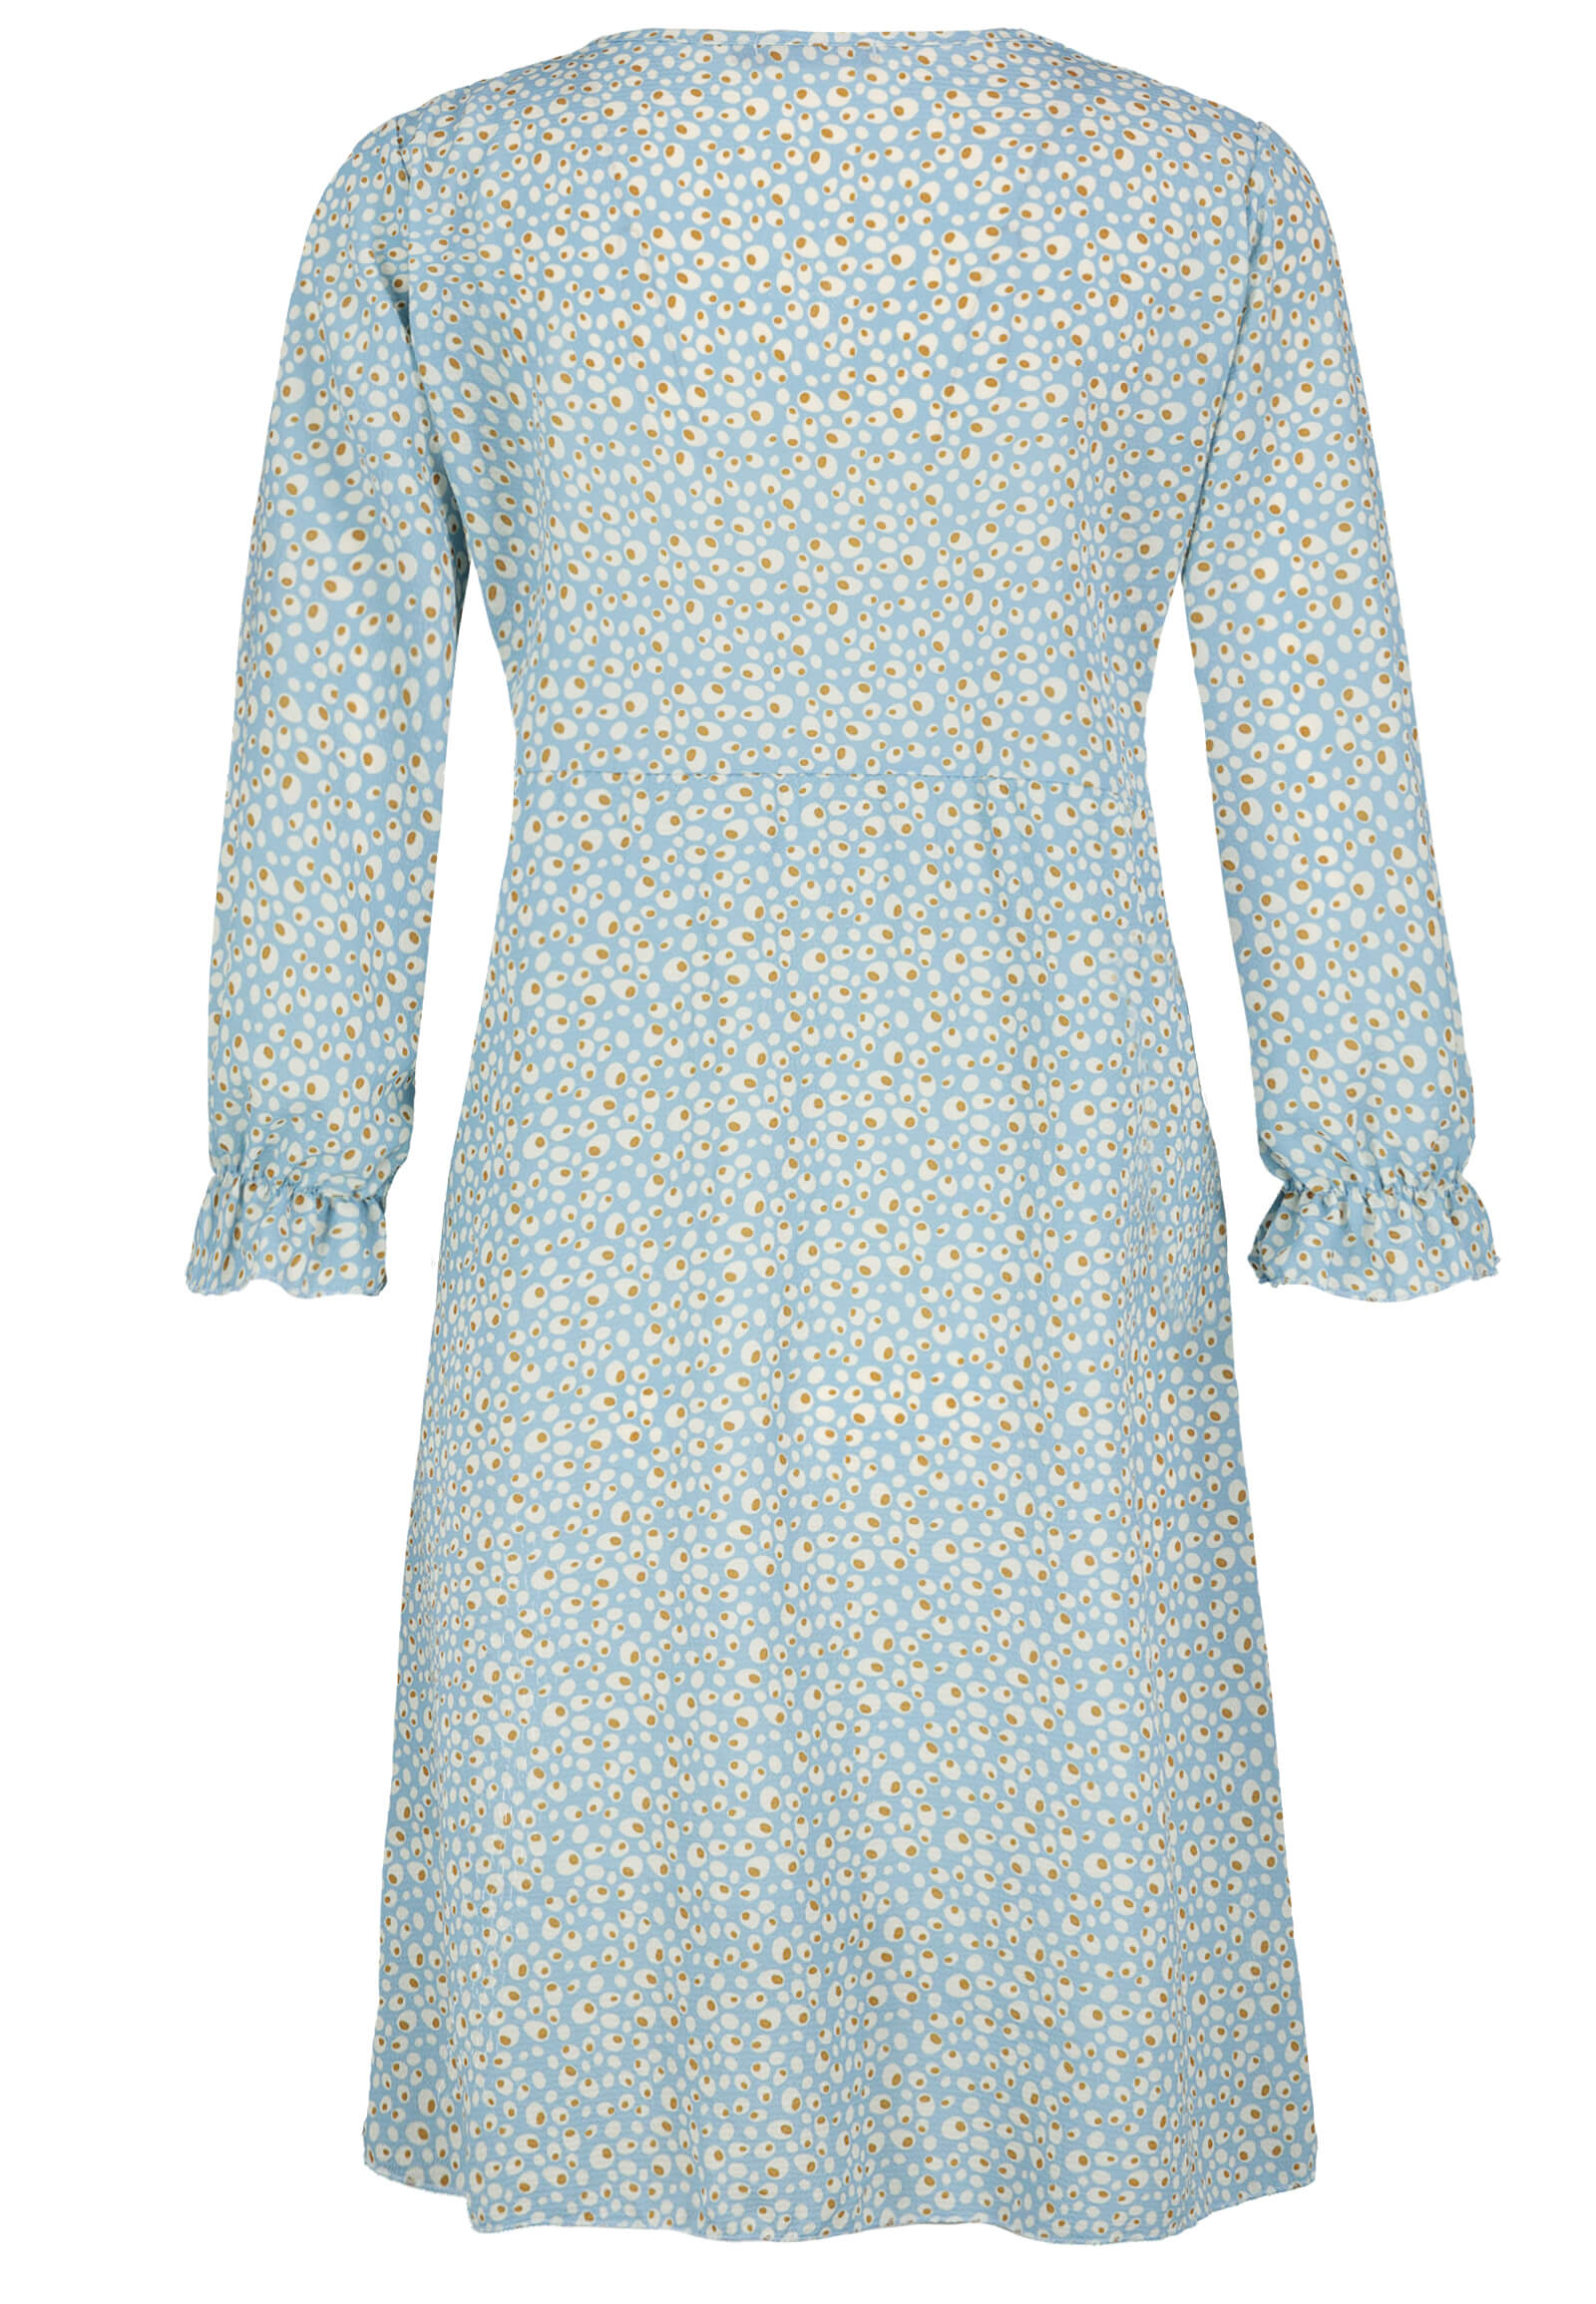 A-Linien Kleid mit Muster Print